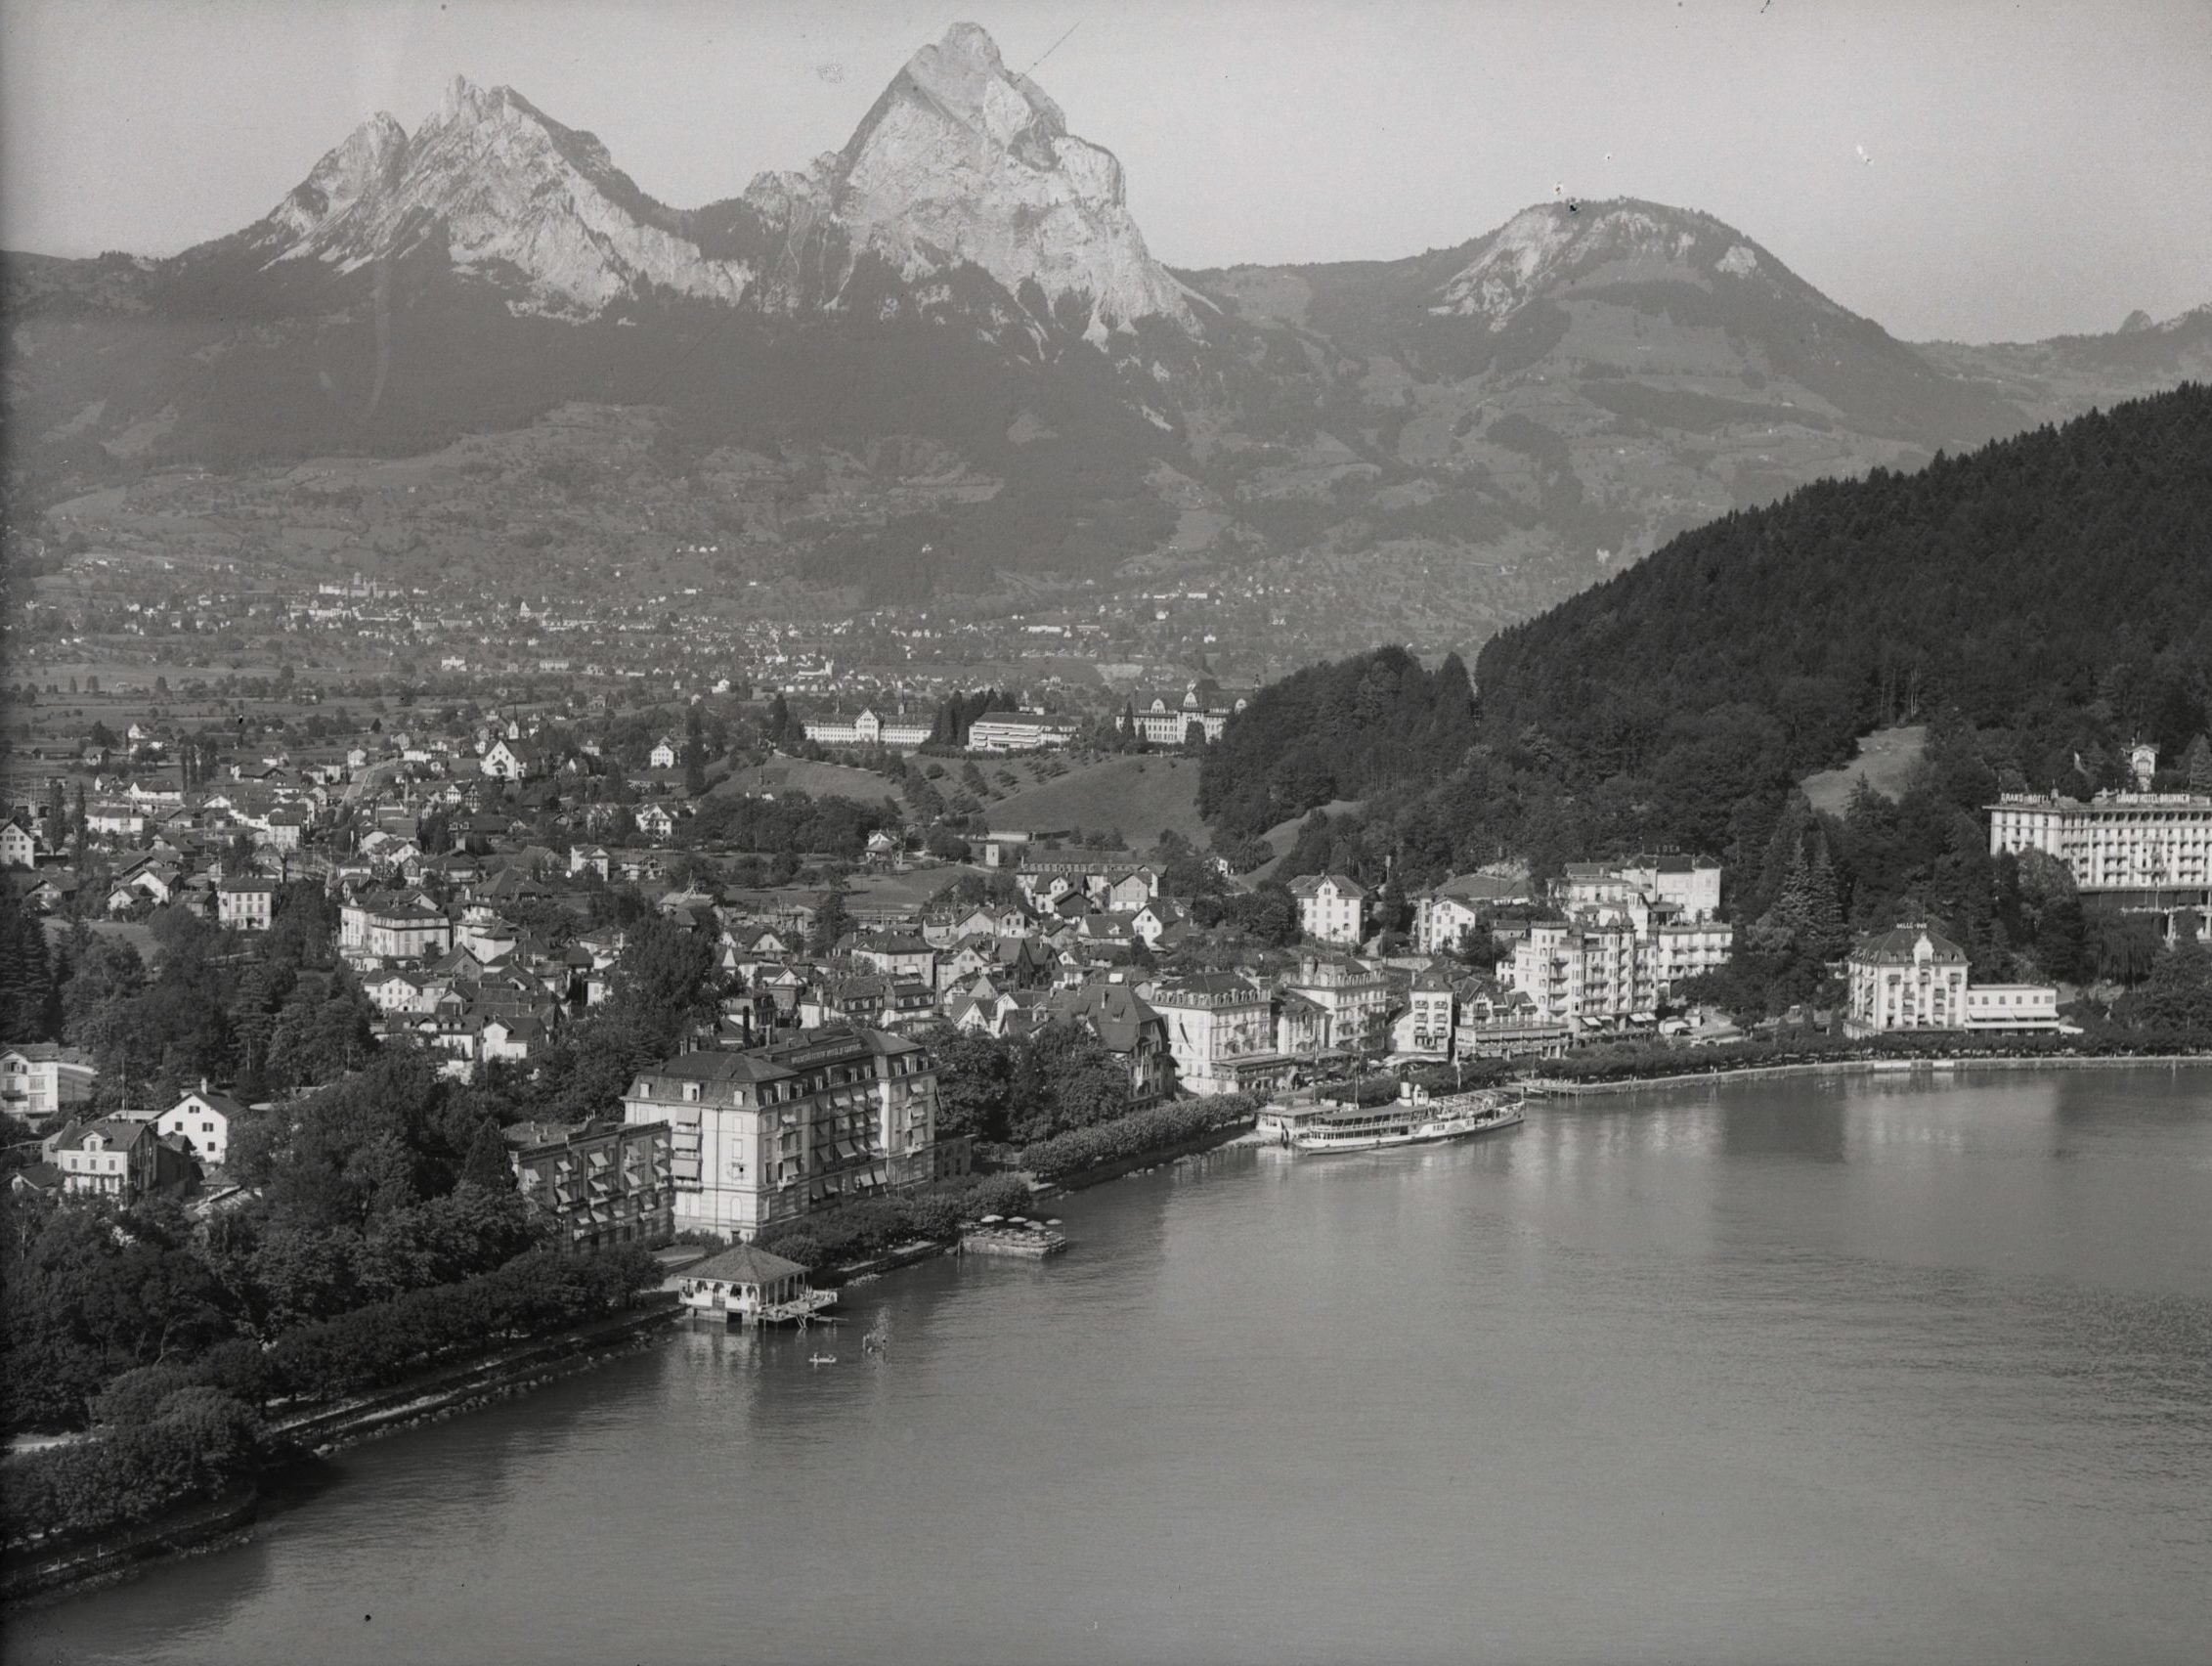 Niebuhr’s Report from Switzerland, 1947